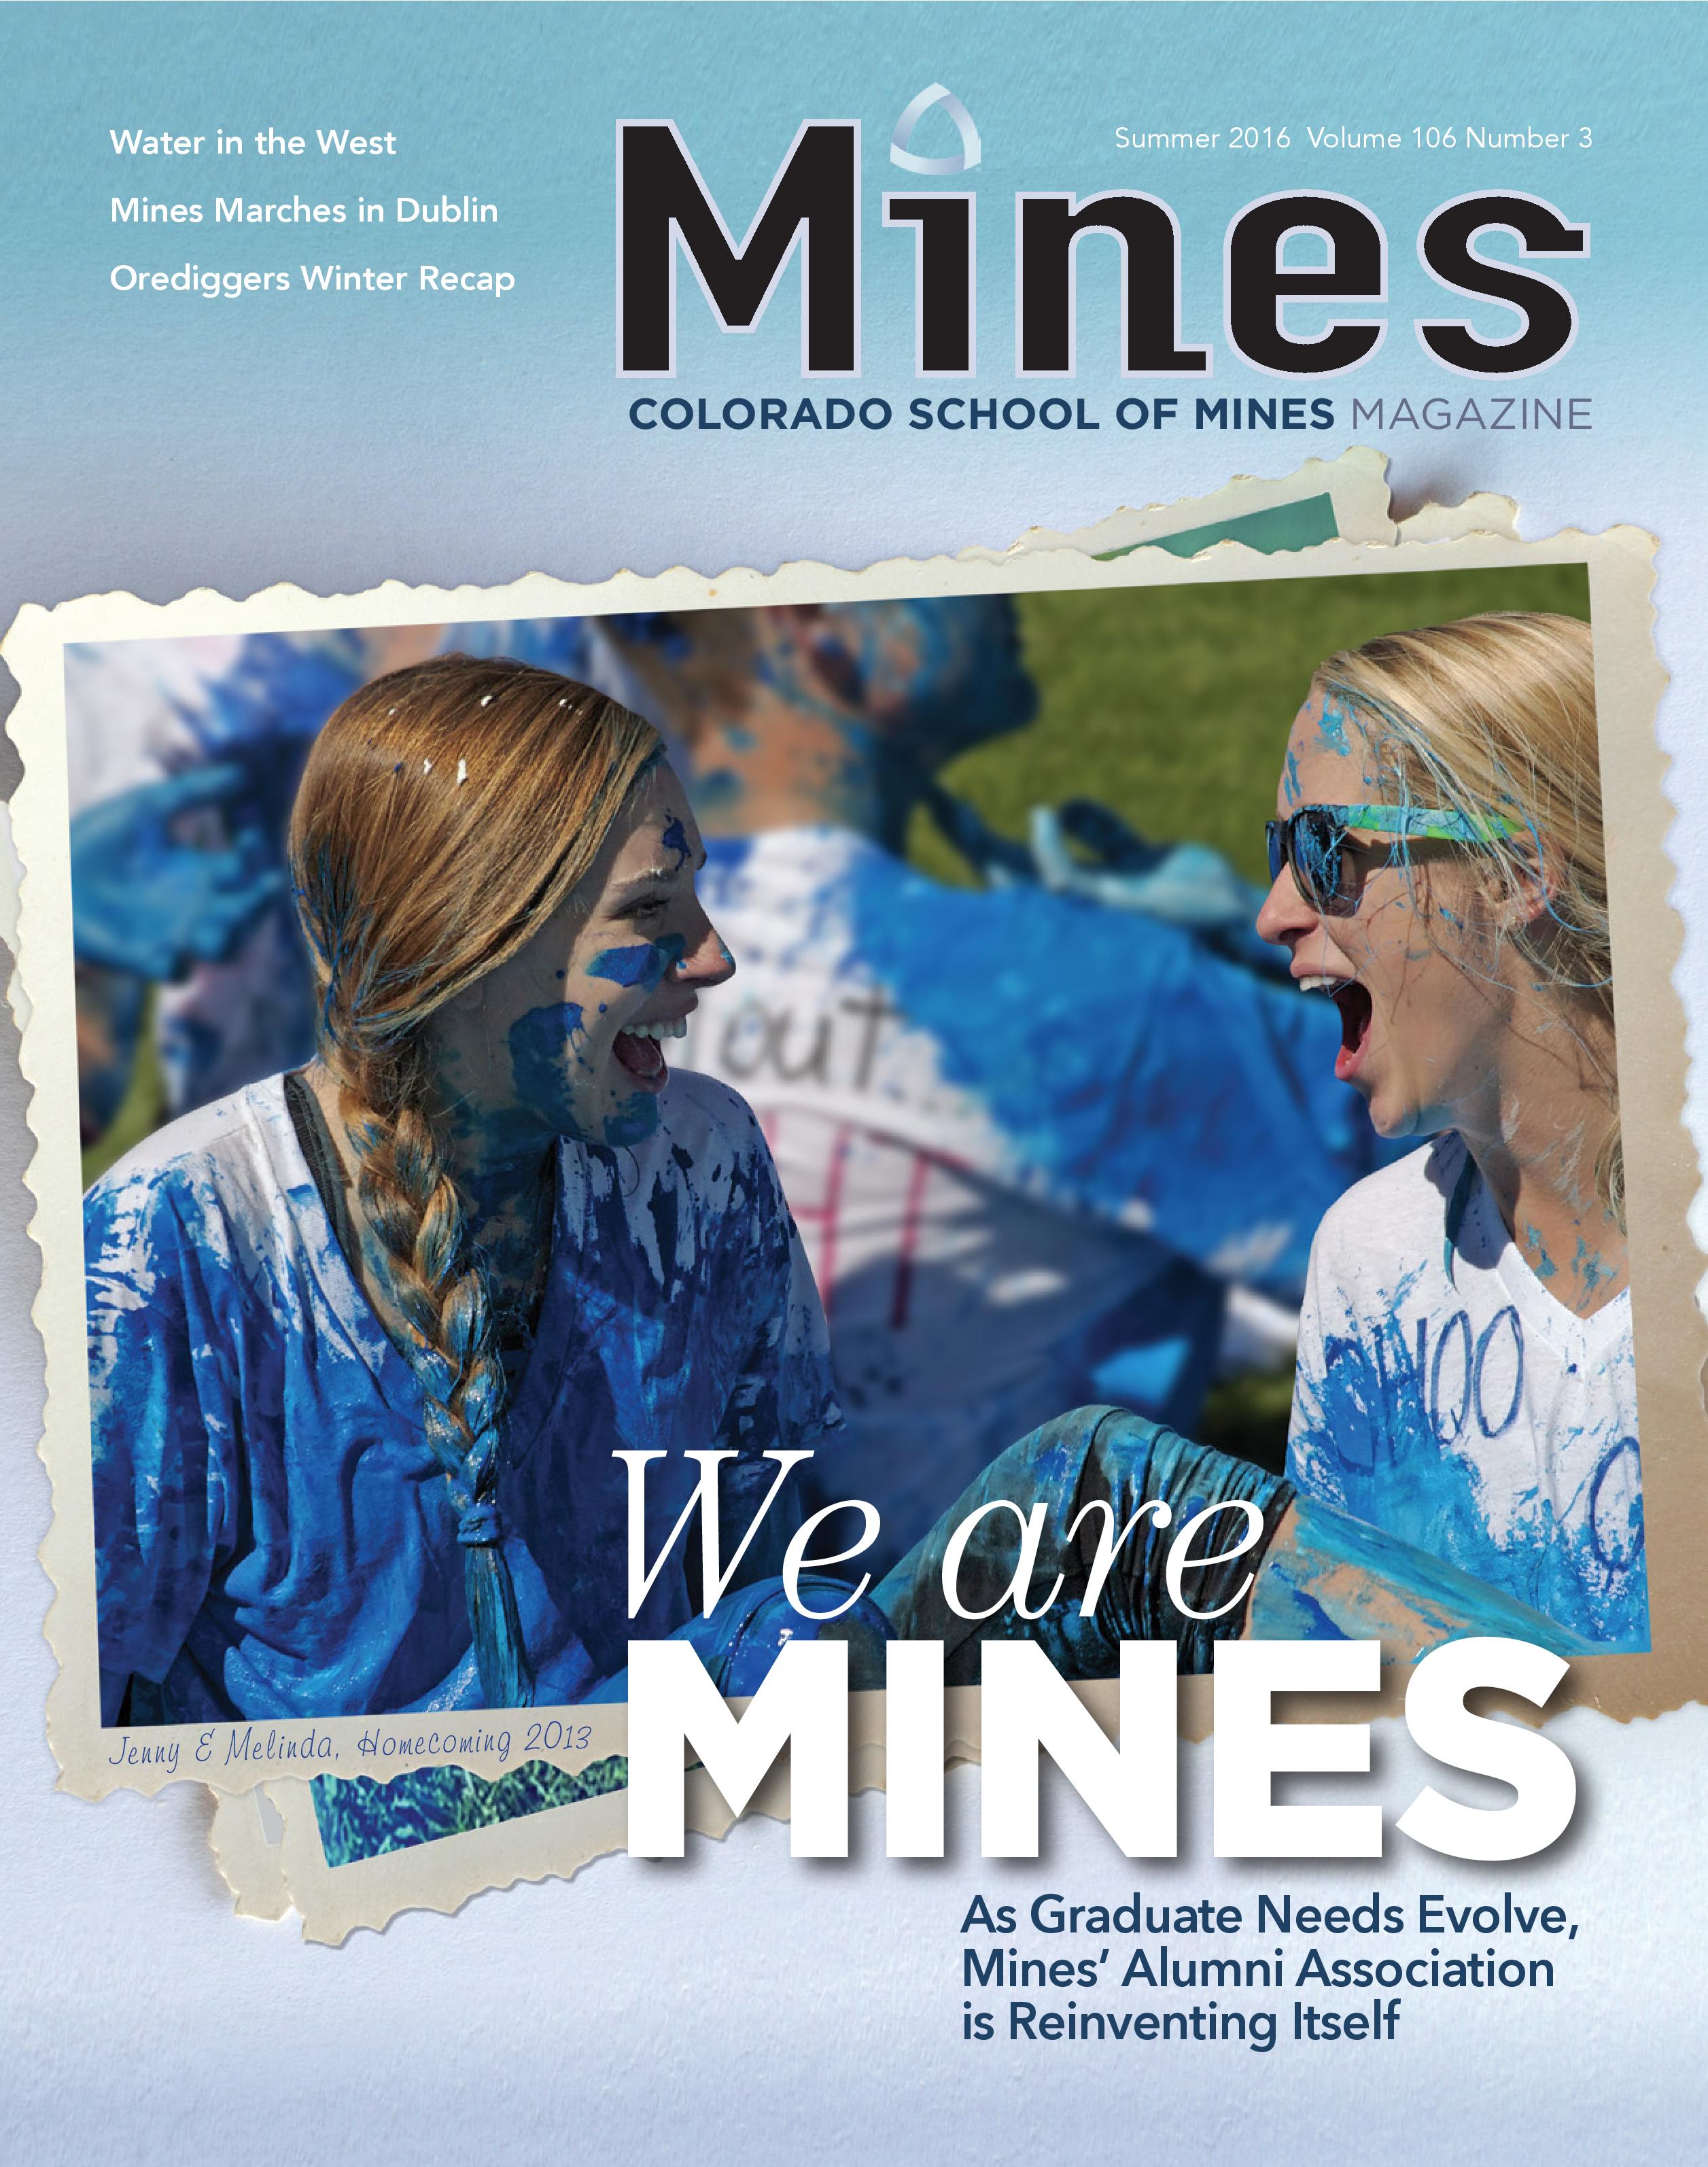 We Are Mines: As Graduate Needs Evolve, Mines’ Alumni Association is Reinventing Itself